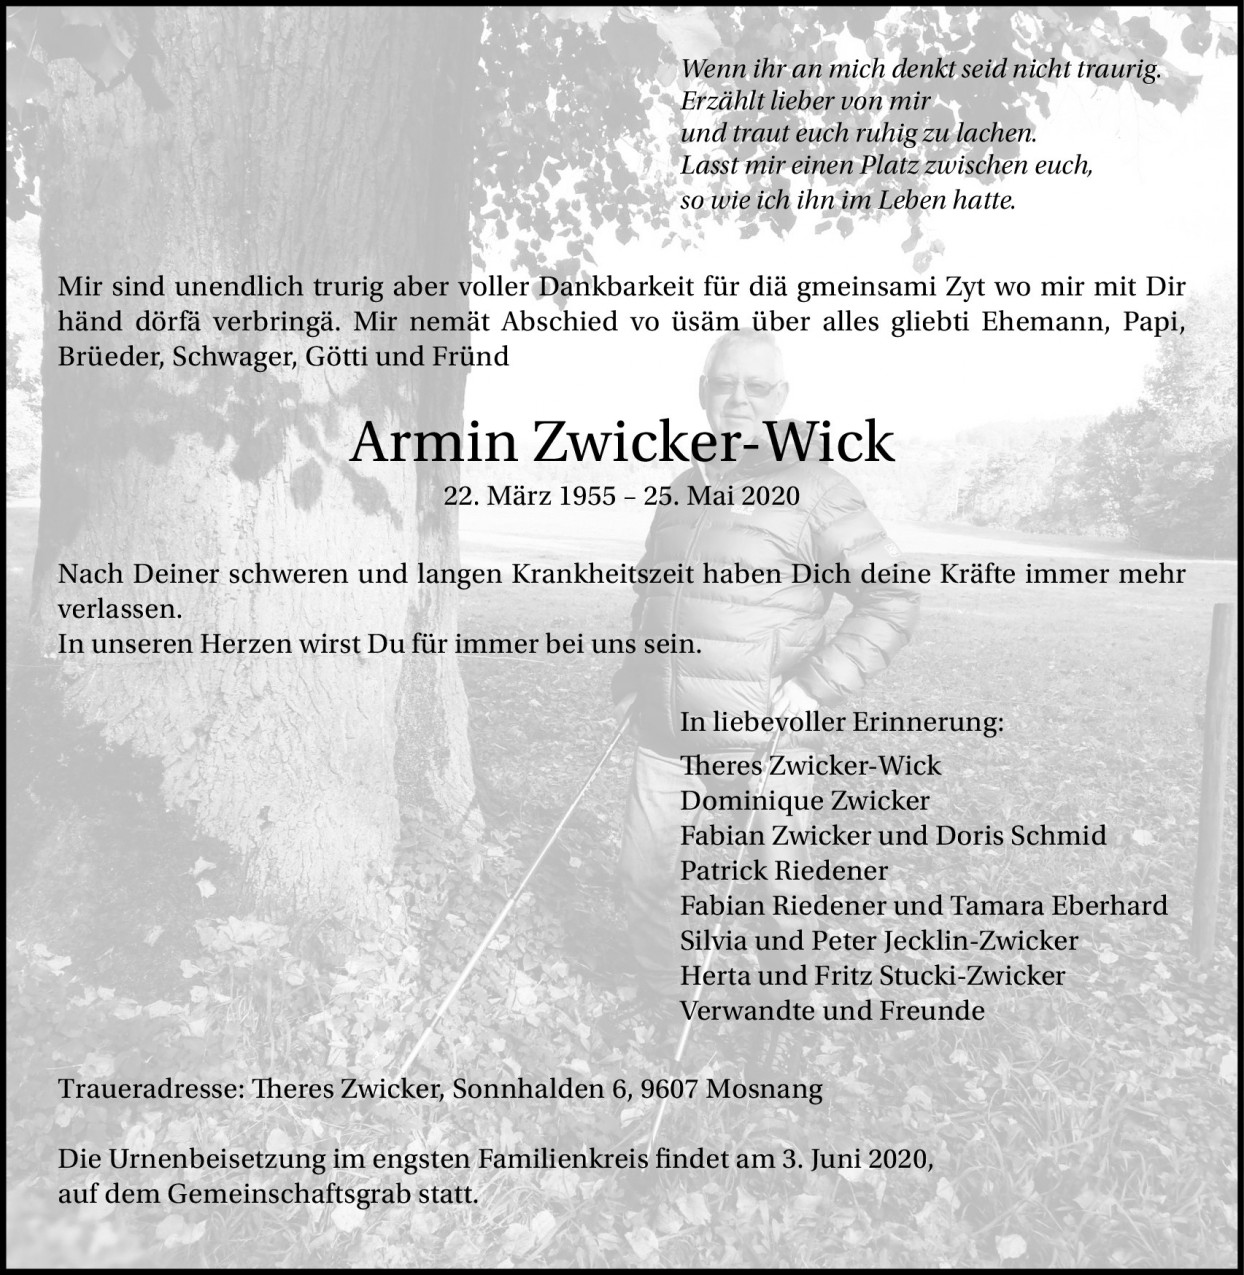 Armin Zwicker-Wick